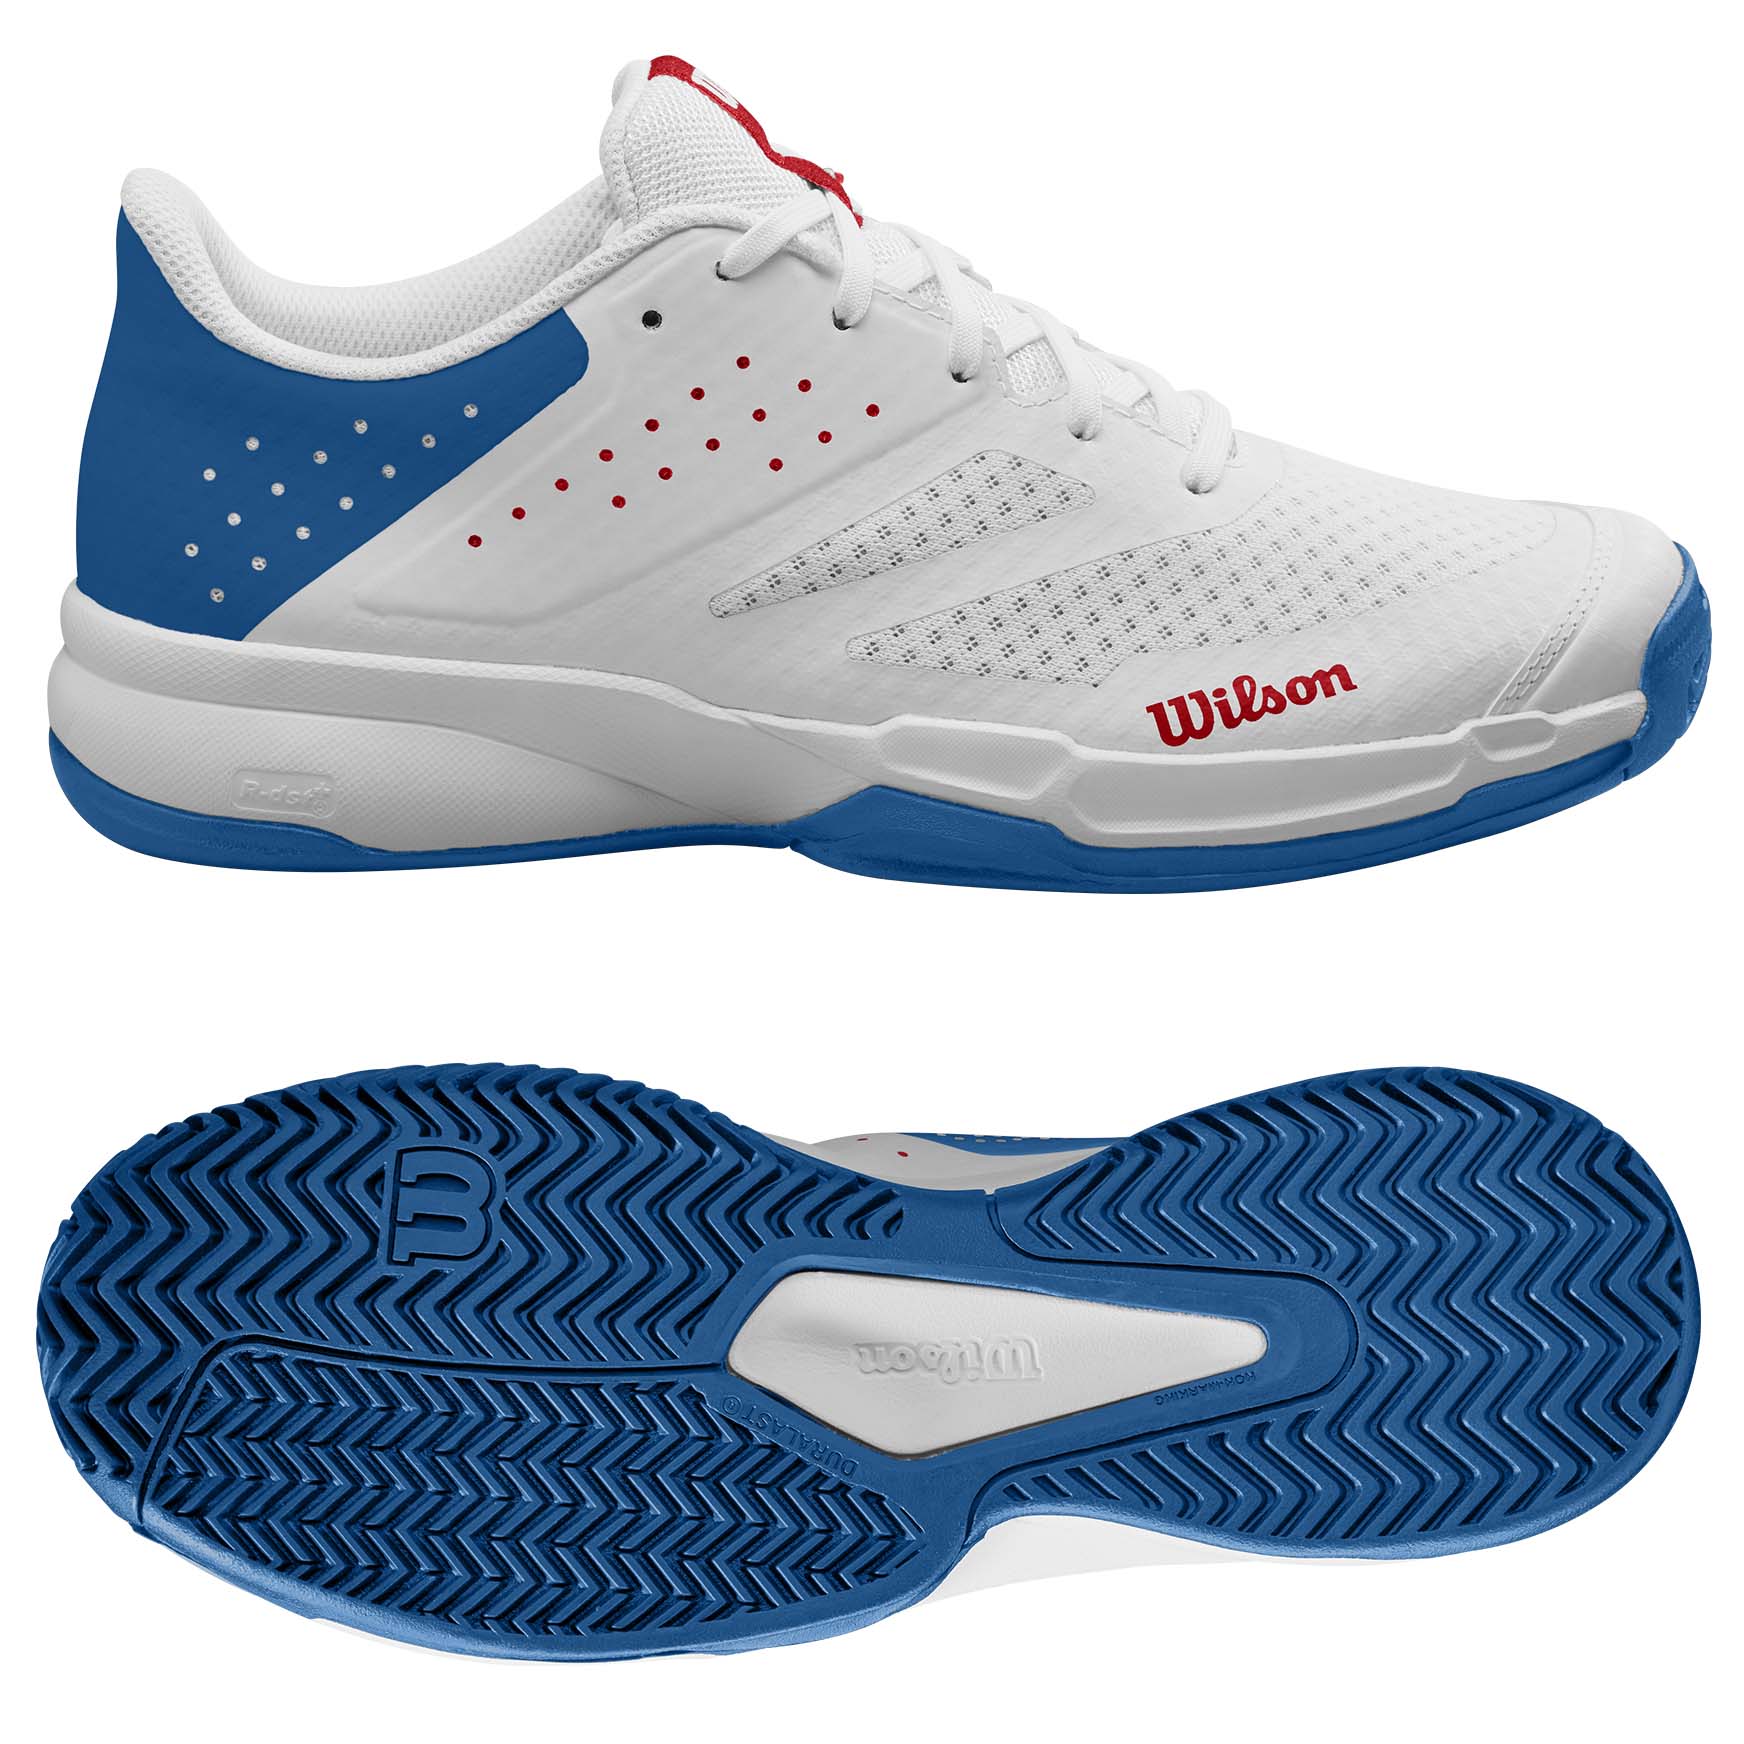 Image of Wilson Kaos Stroke 2.0 Mens Tennis Shoes